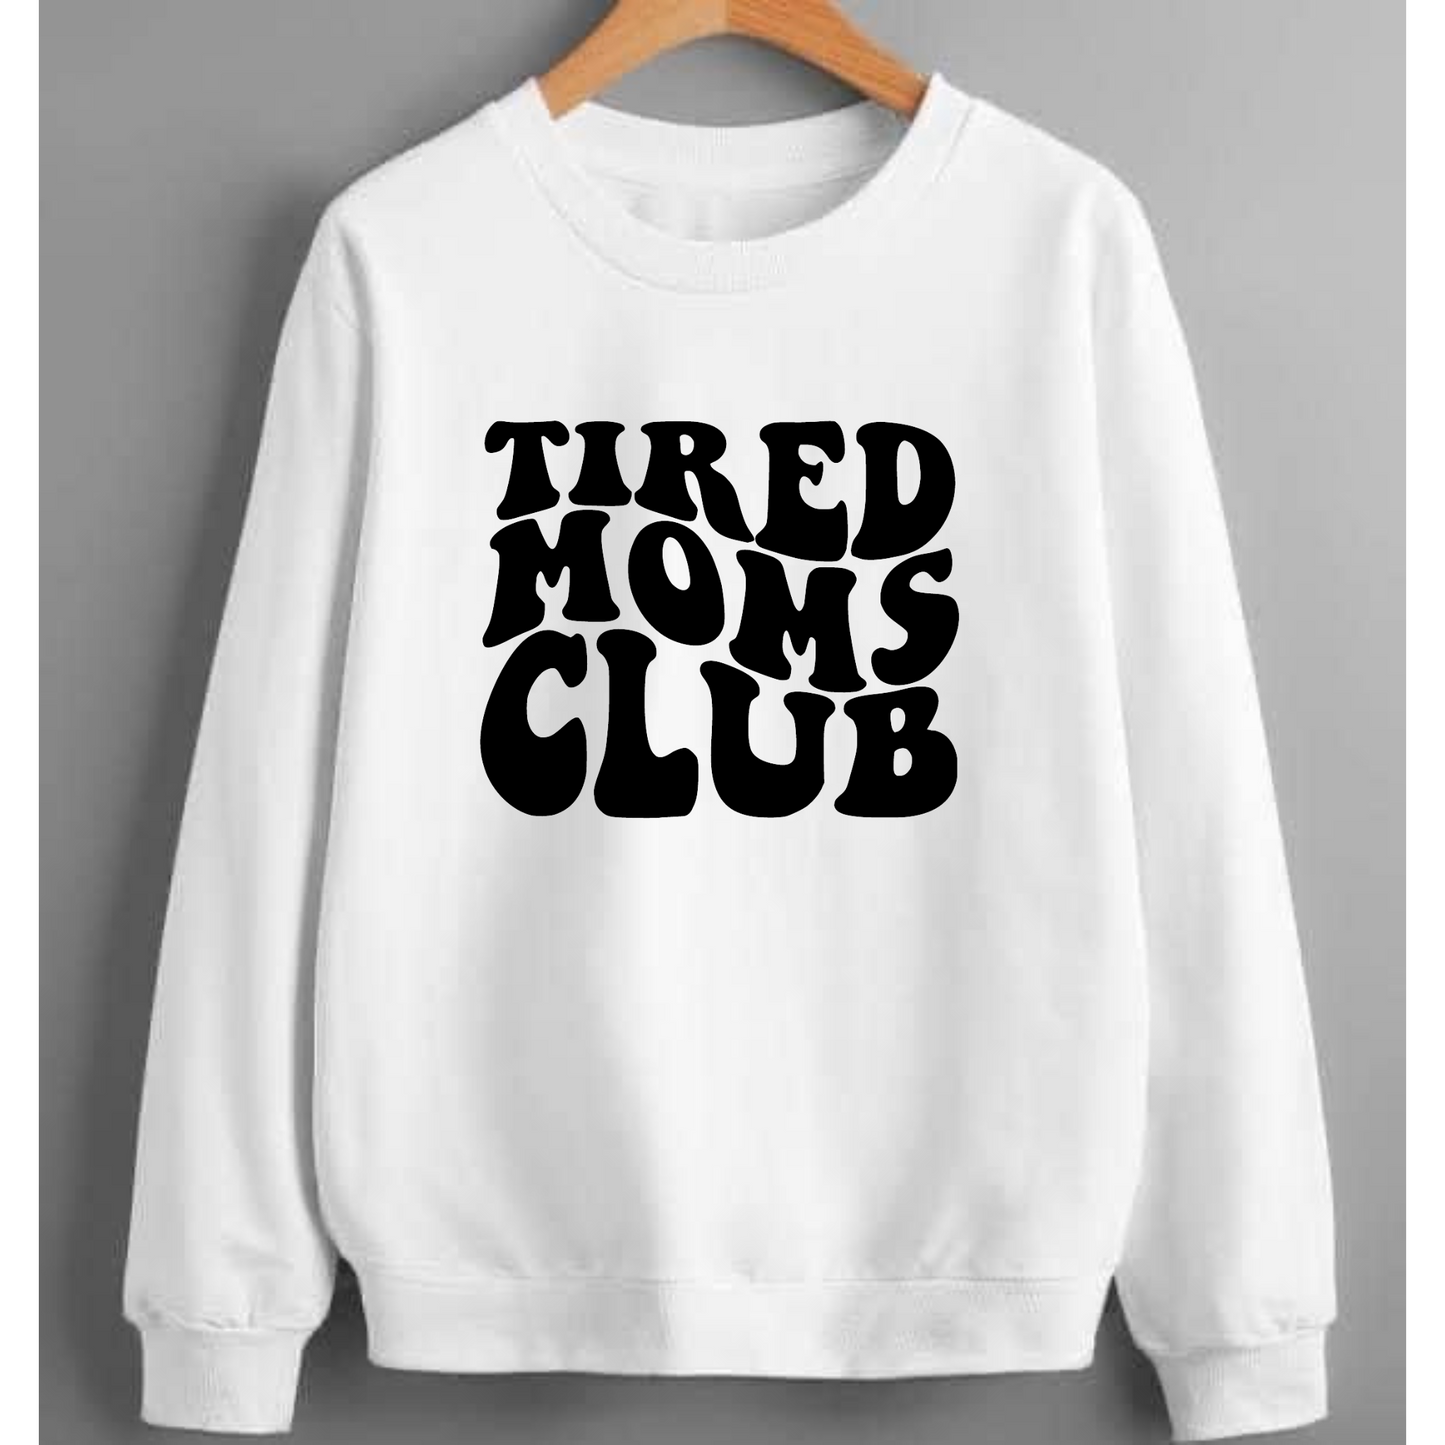 Tired Mom's Club Crewneck Sweatshirt White